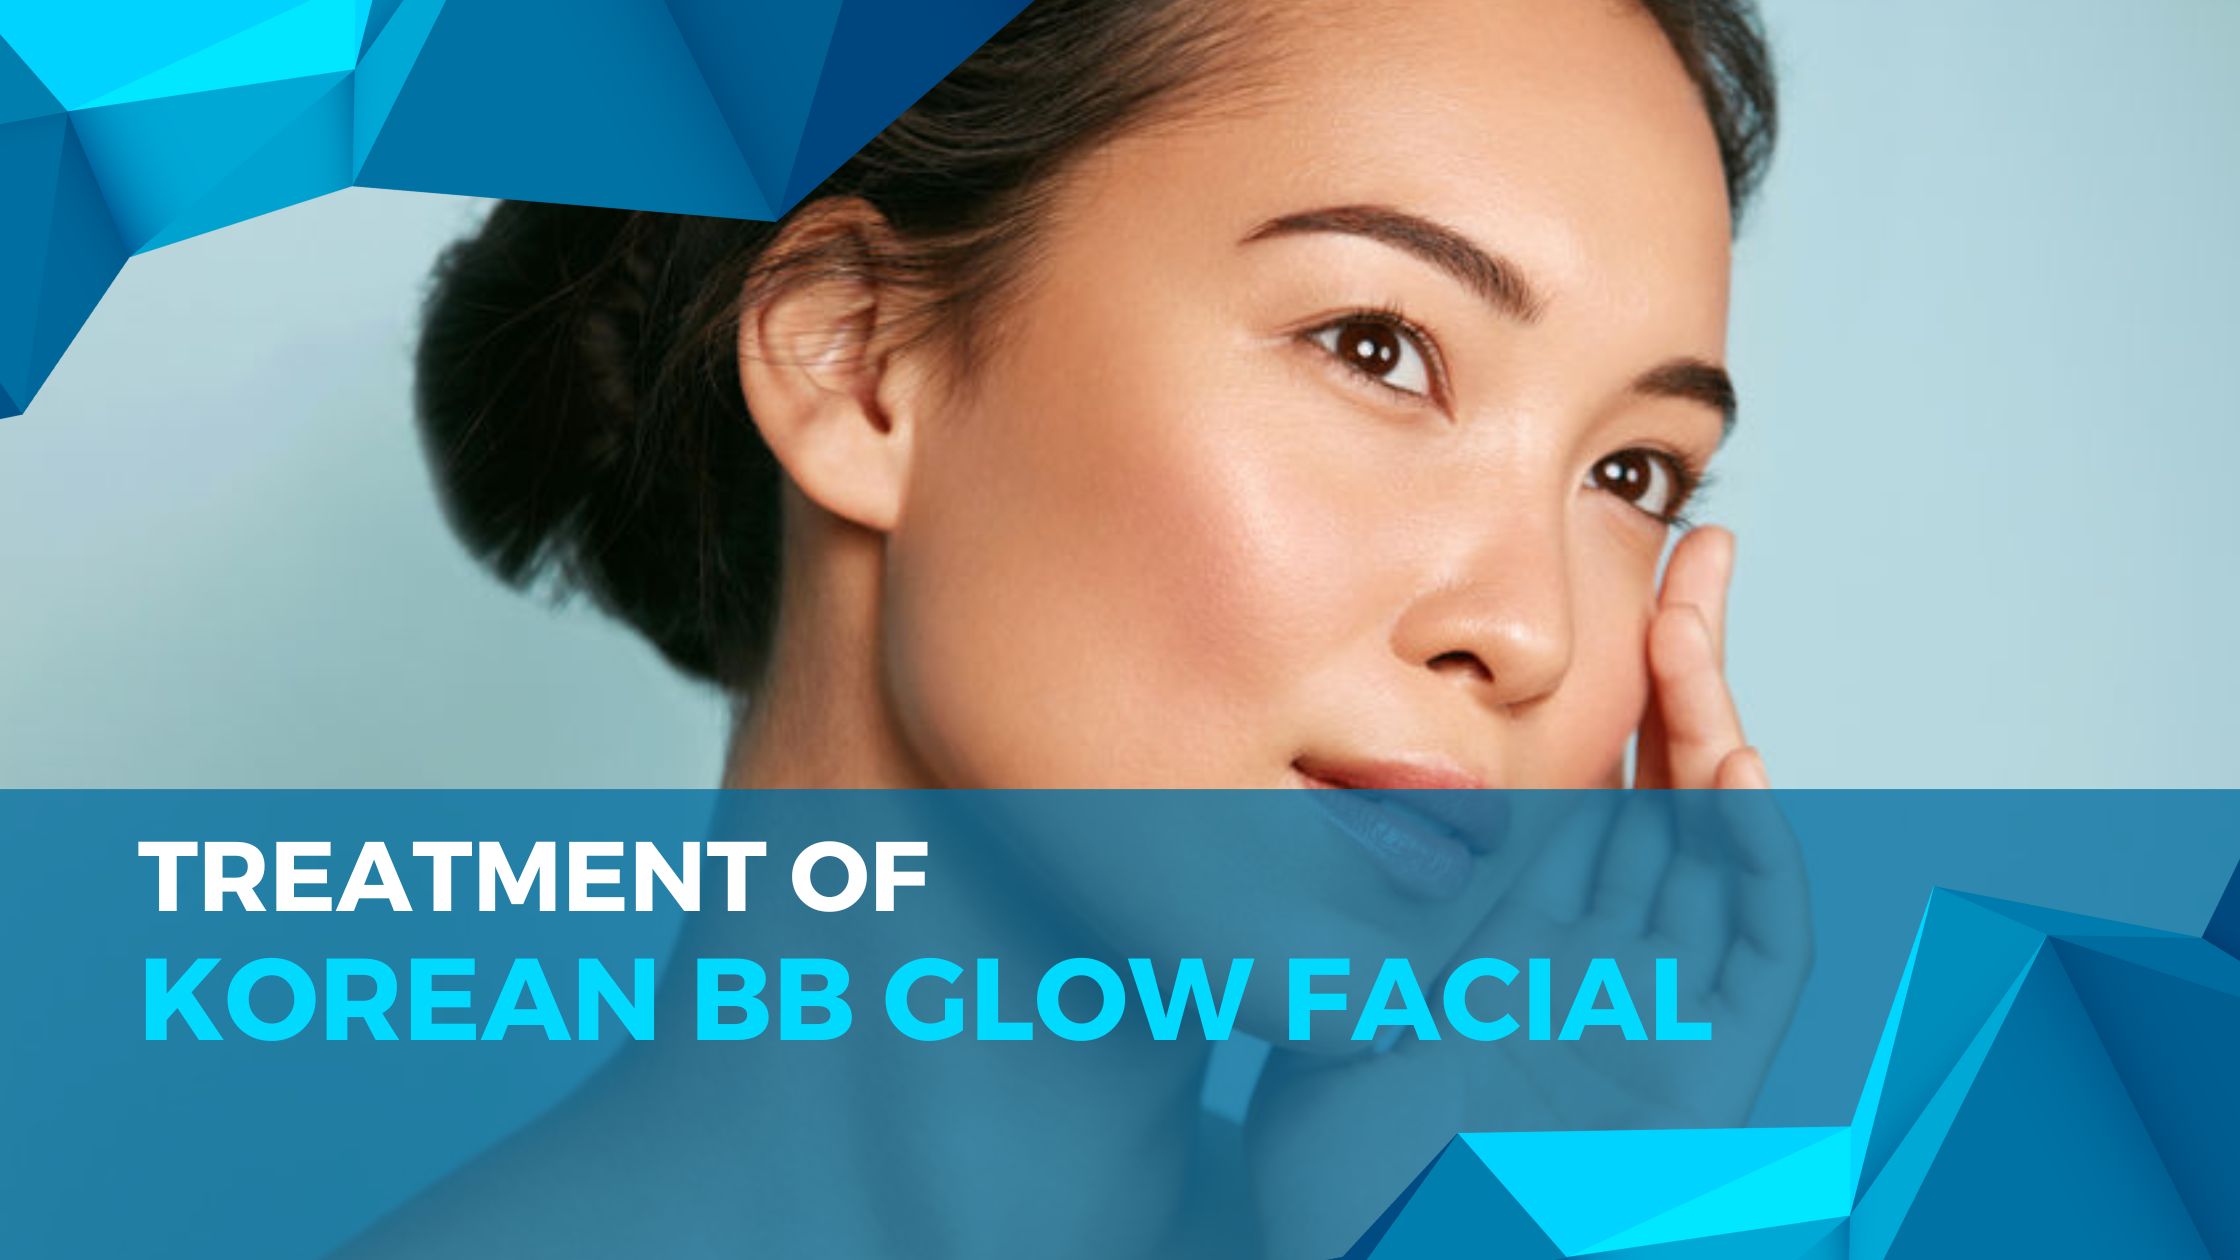 Korean BB Glow Facial Treatment